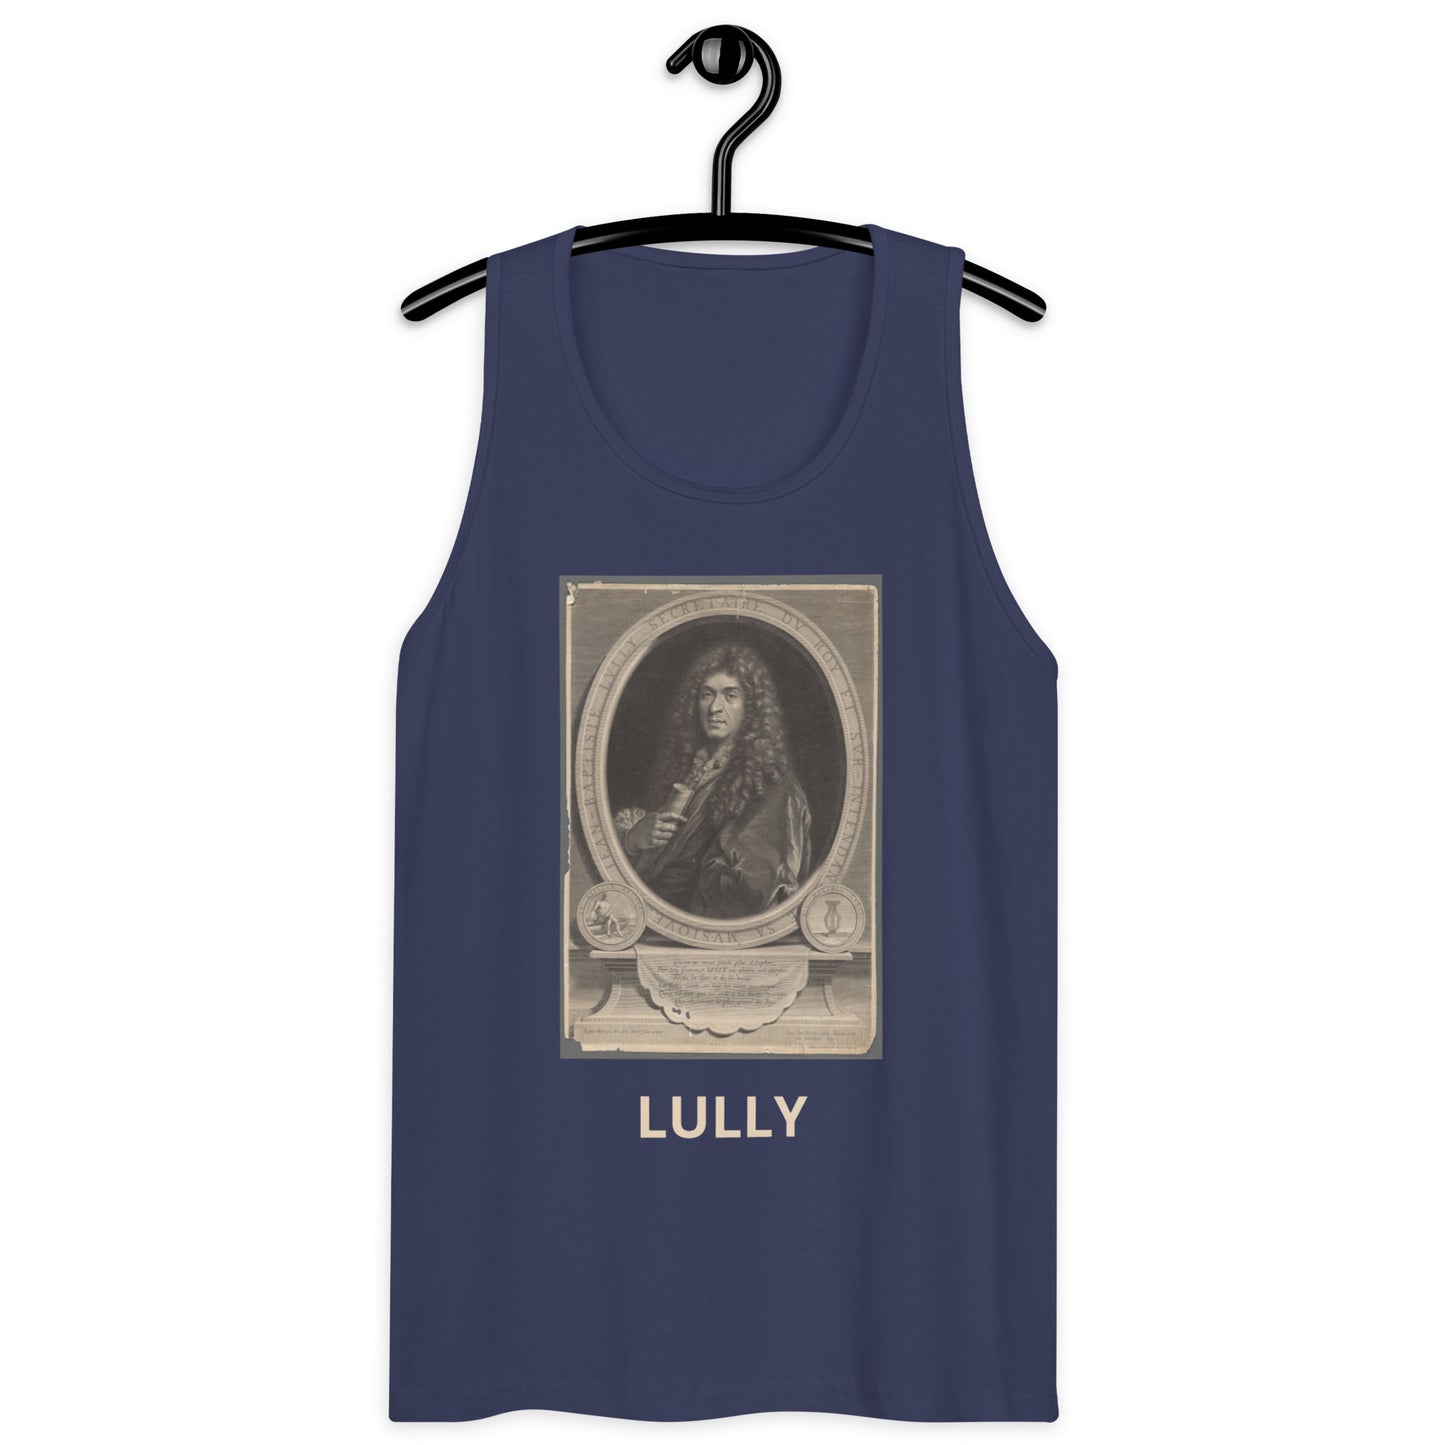 Lully men’s premium tank top